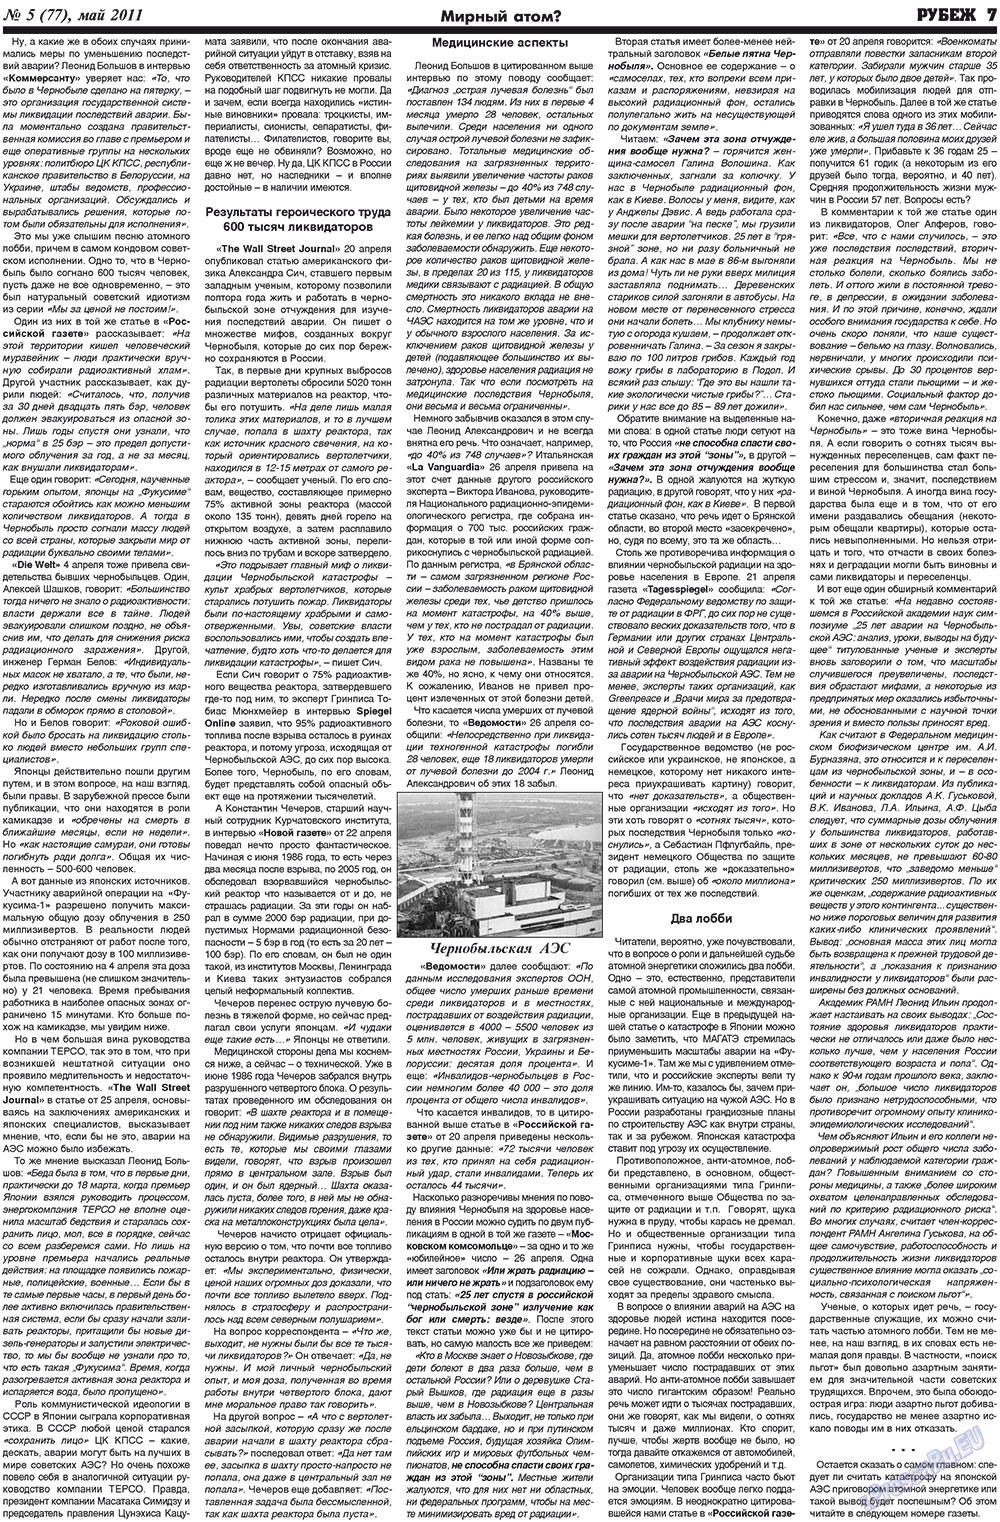 Рубеж, газета. 2011 №5 стр.7